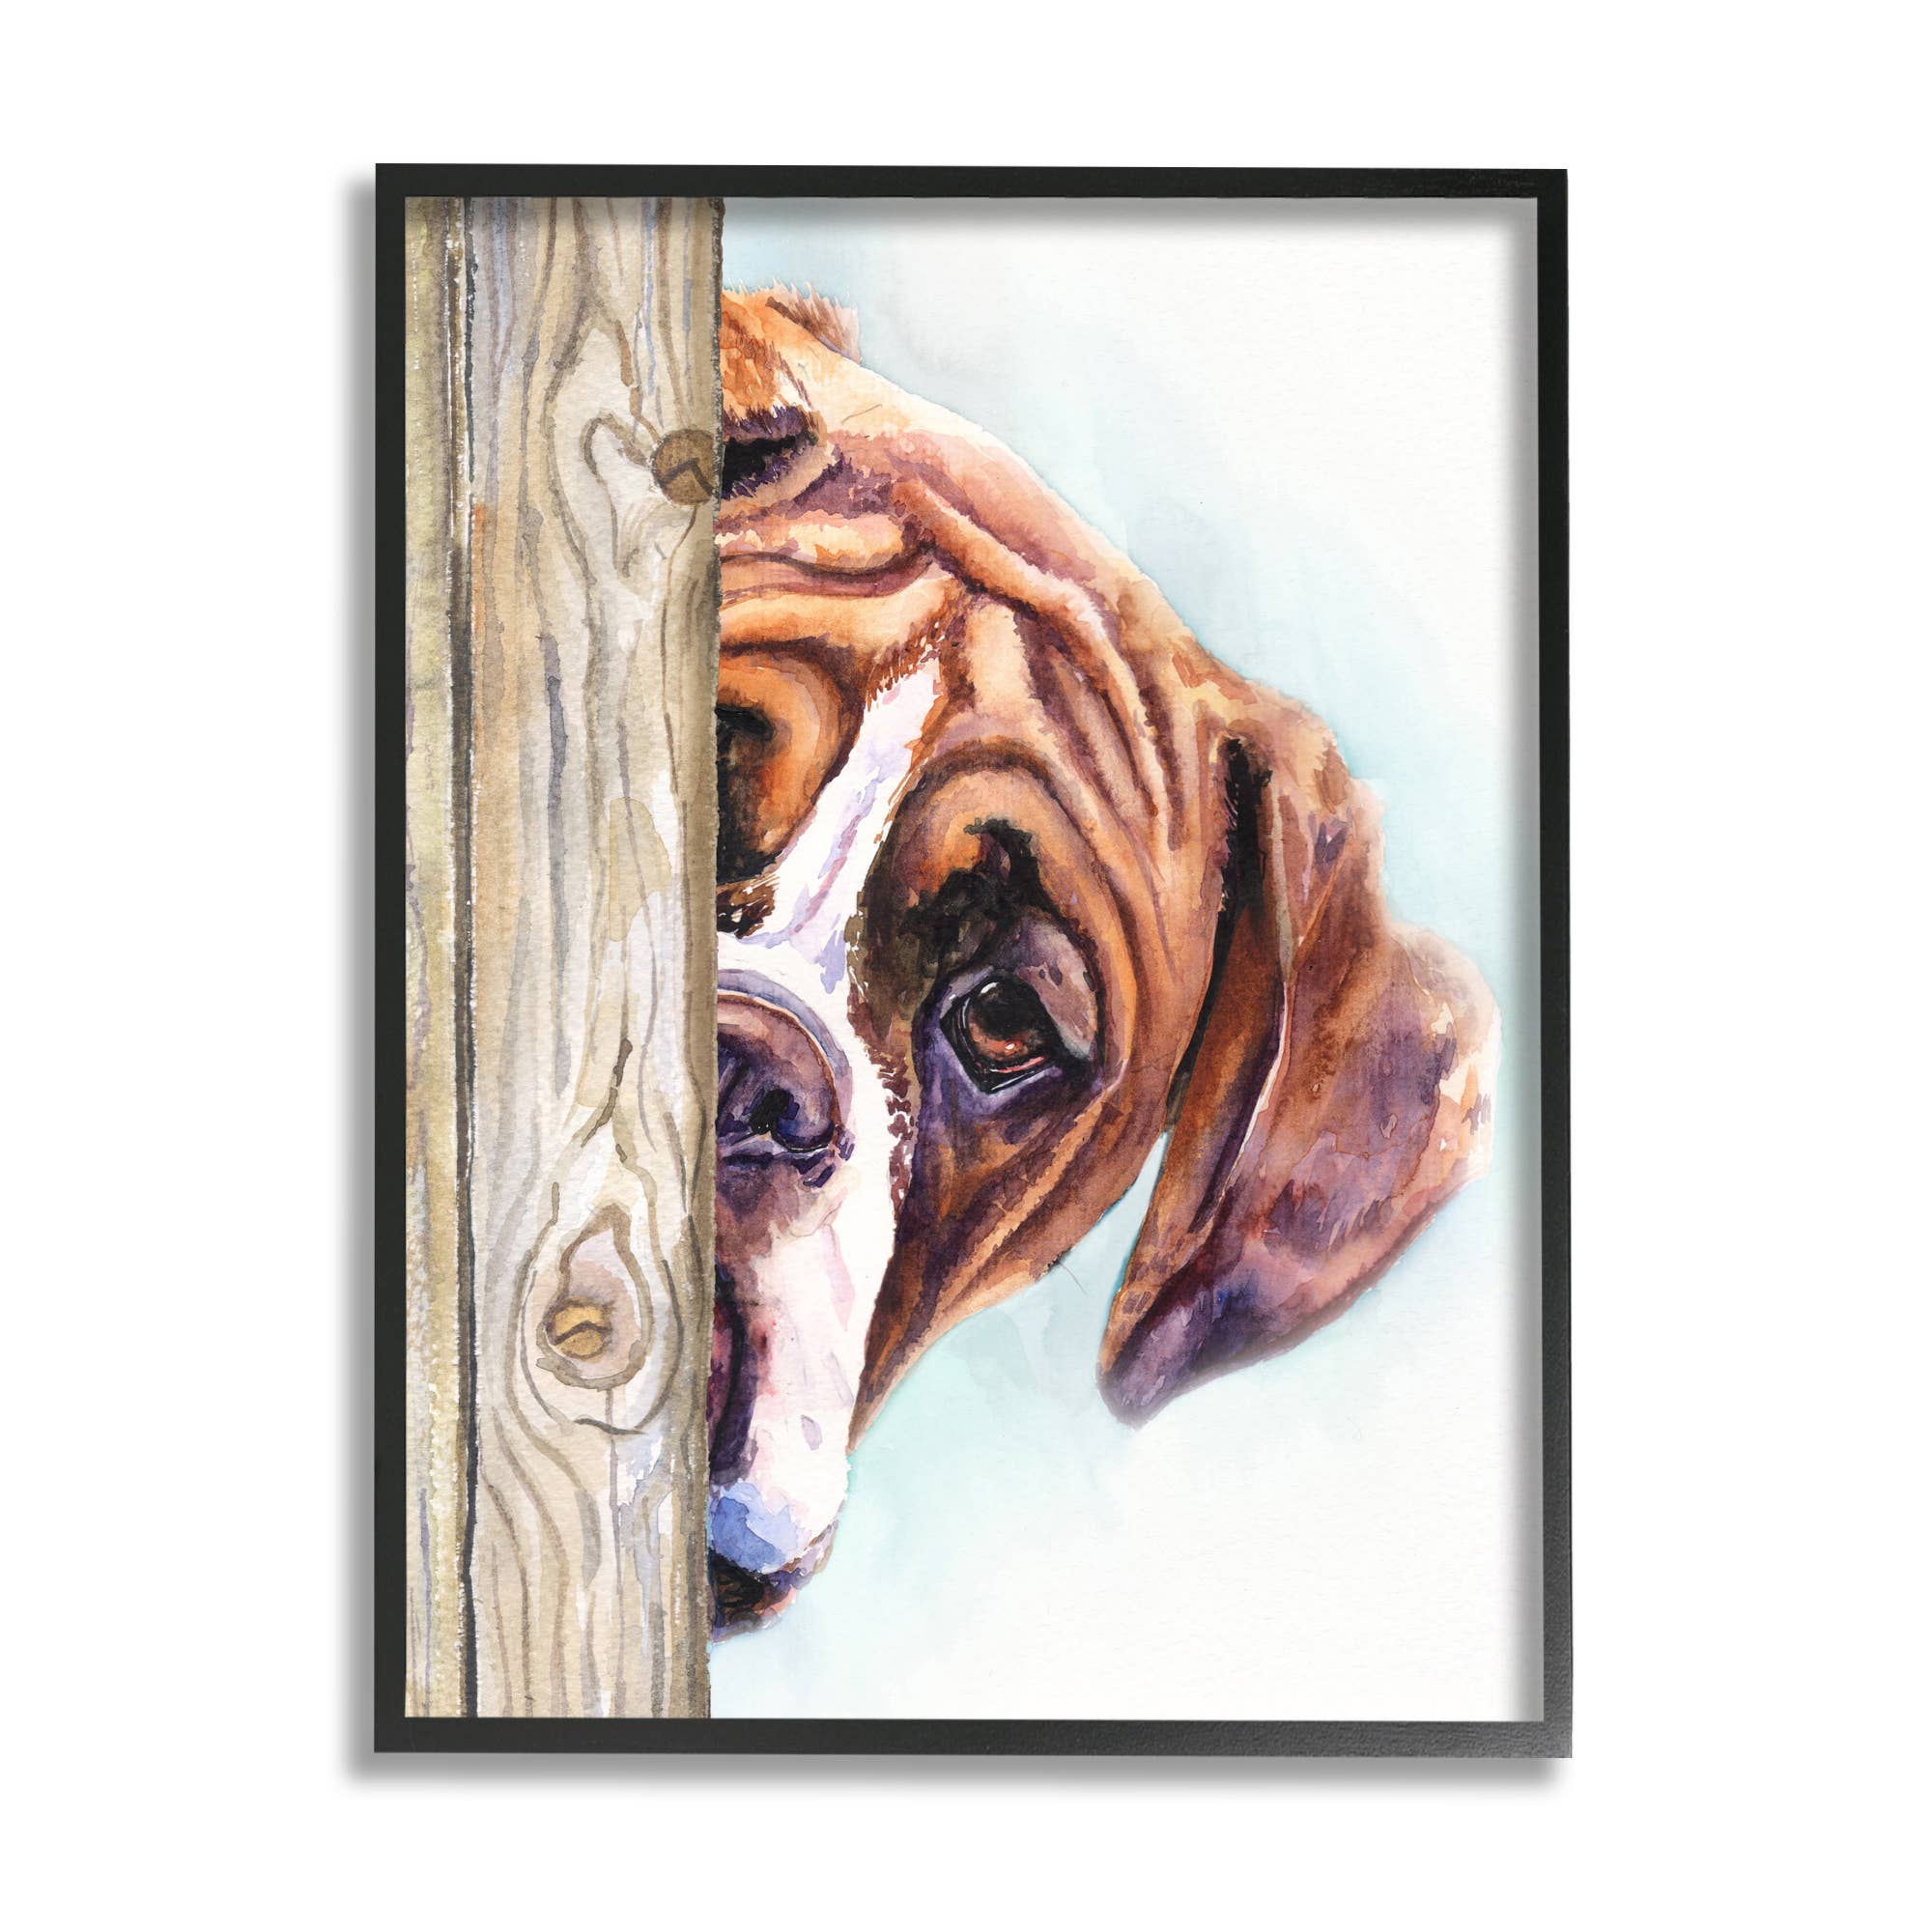 HUNDEWELPE A3 Poster - Hund Baby Welpe Tier Plakat NEU ca. 42 x 28 cm 